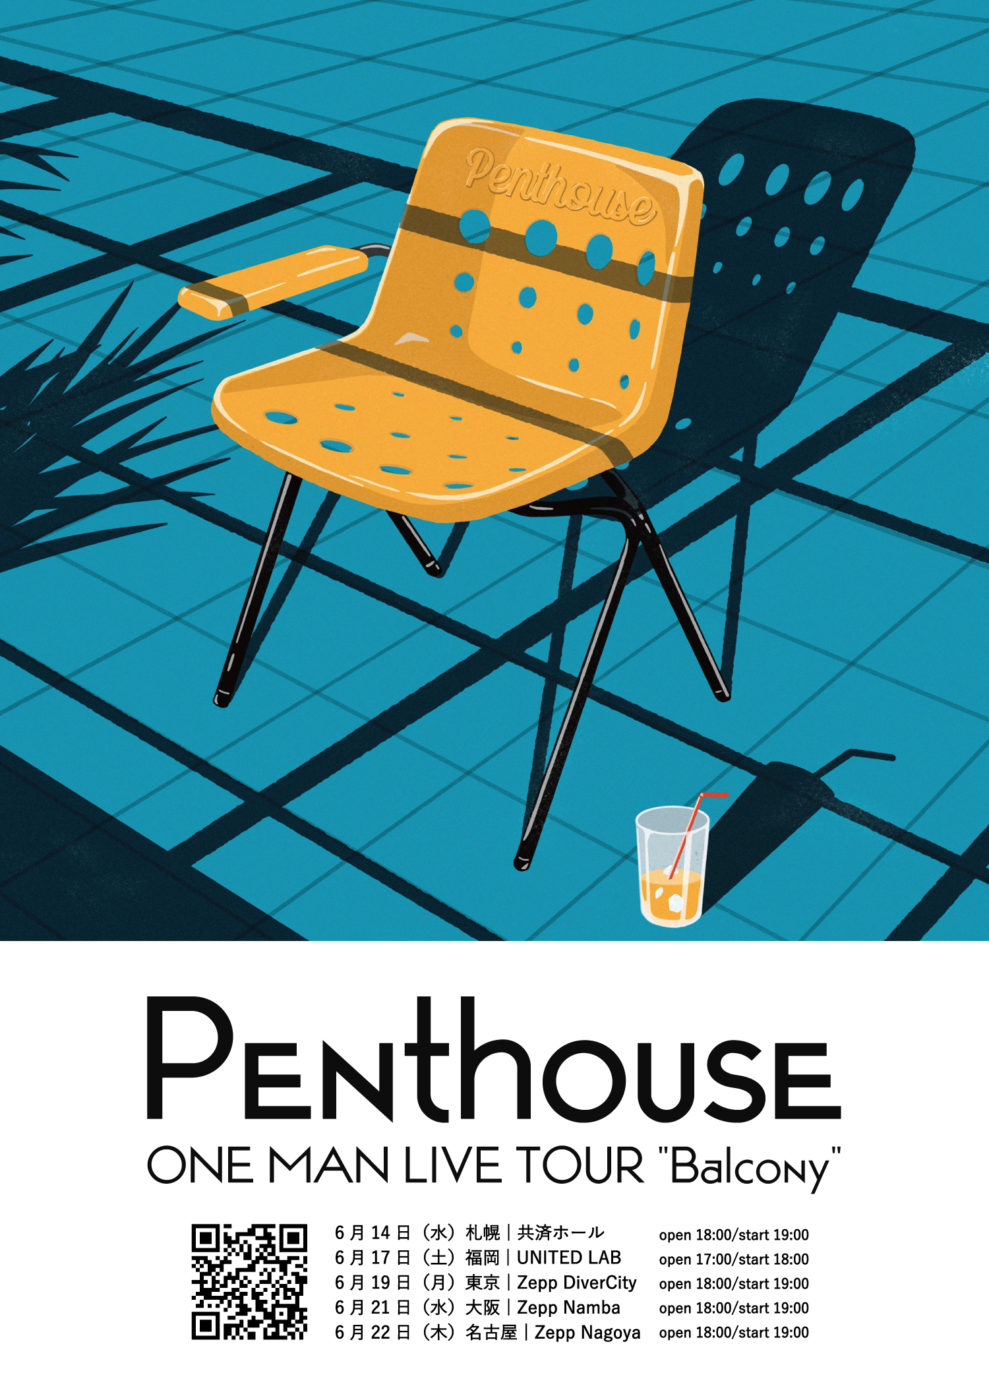 6月19日(月) Penthouse ONE MAN LIVE TOUR “Balcony” 東京・Zepp DiverCity